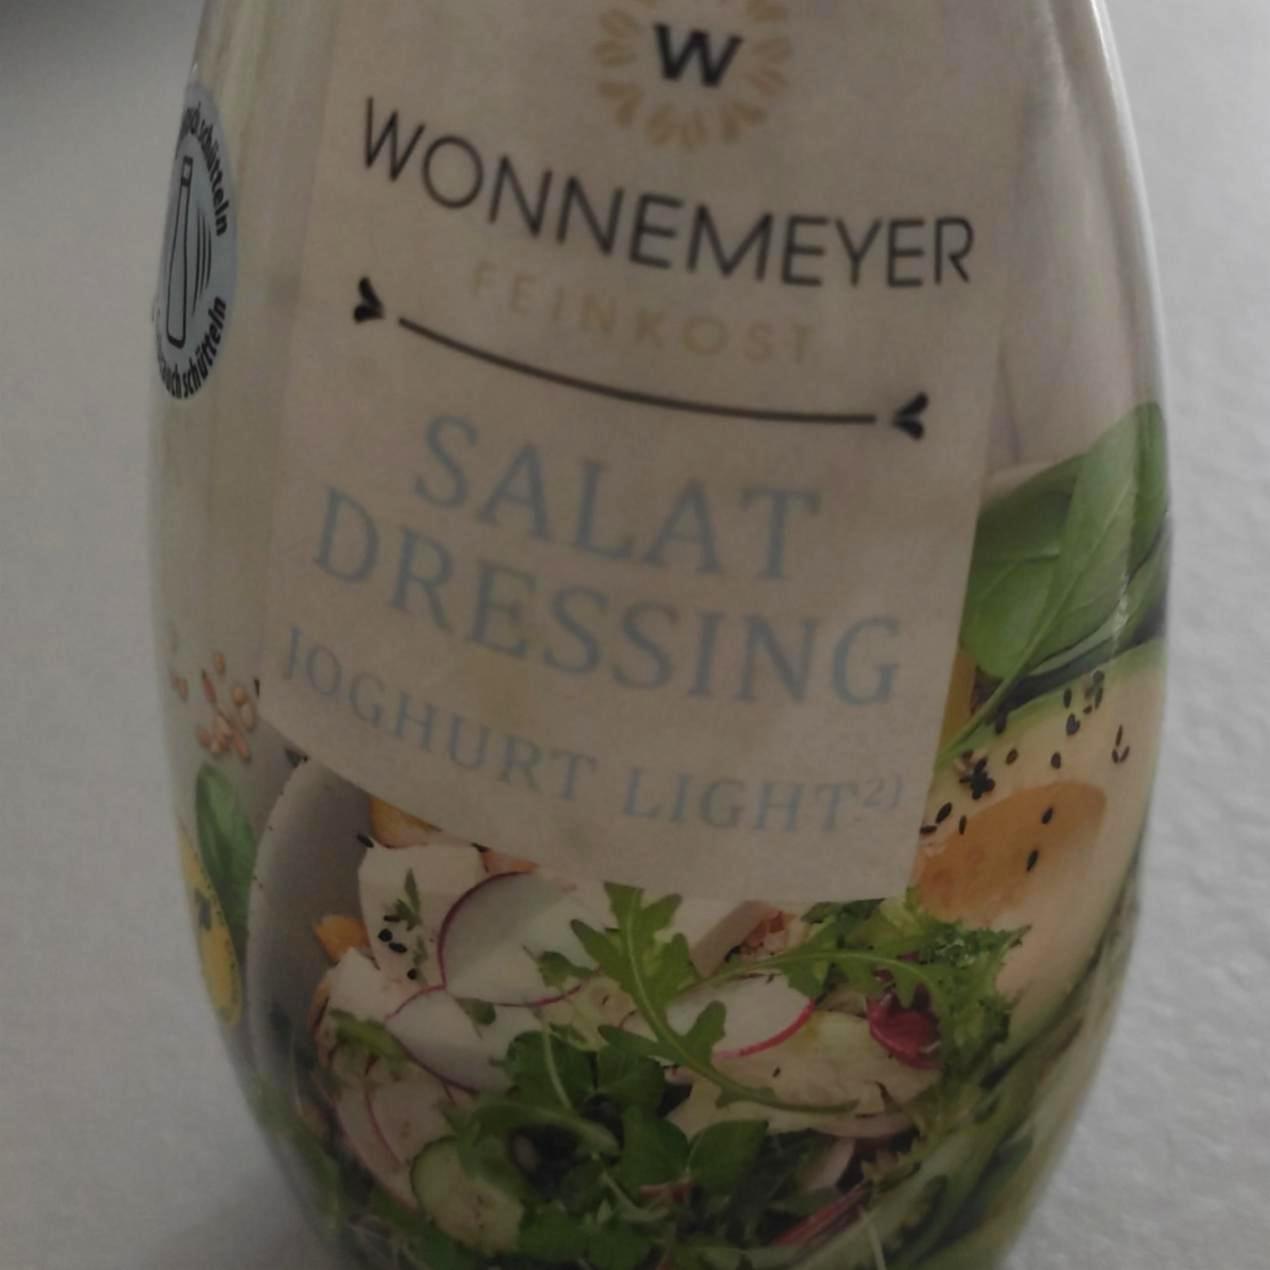 Fotografie - Salat Dressing Joghurt Light Wonnemeyer Feinkost